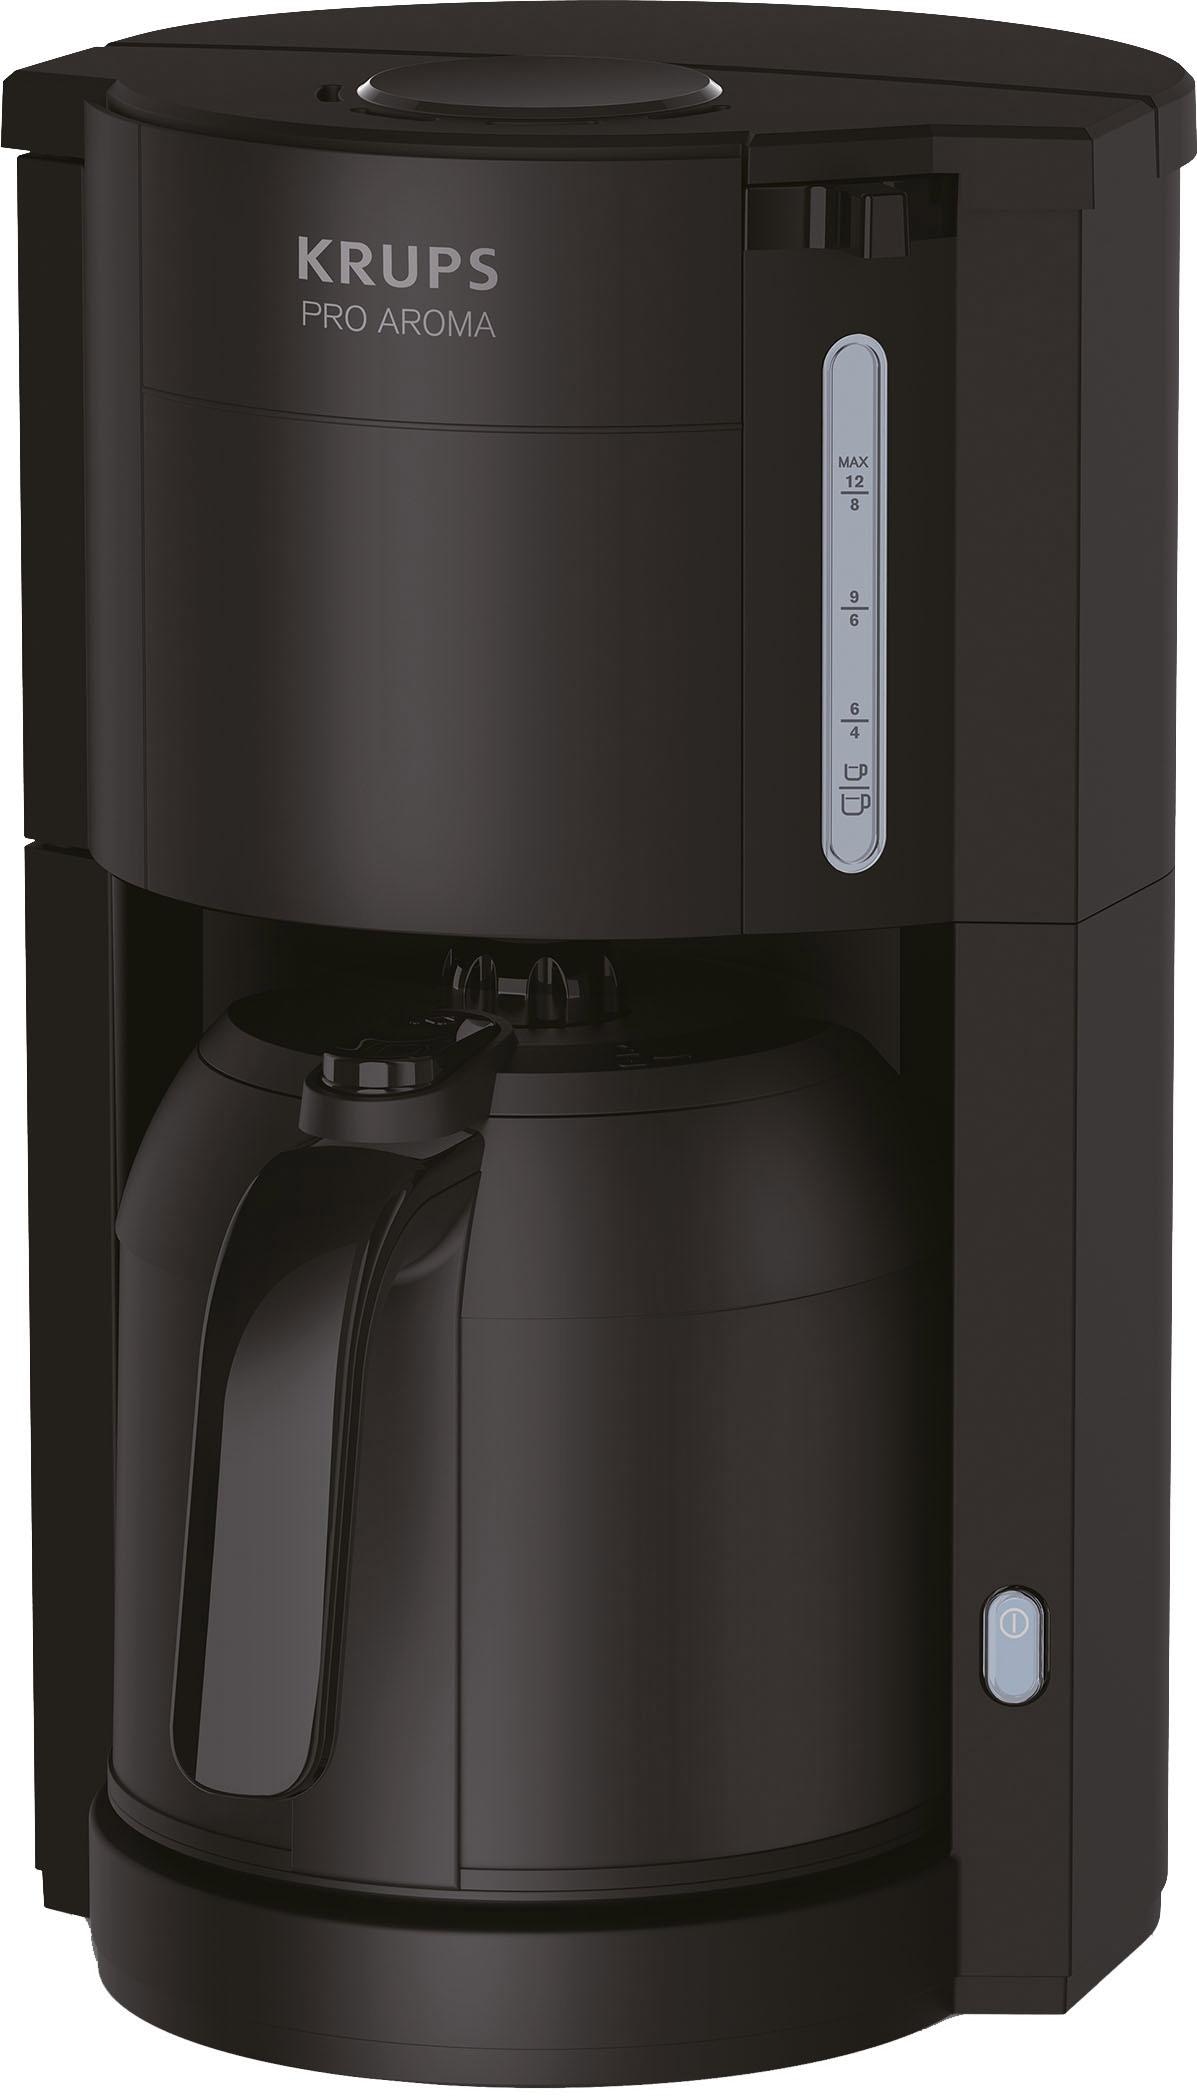 Krups Filterkaffeemaschine "Pro Aroma KM3038", 1 l Kaffeekanne, Papierfilter